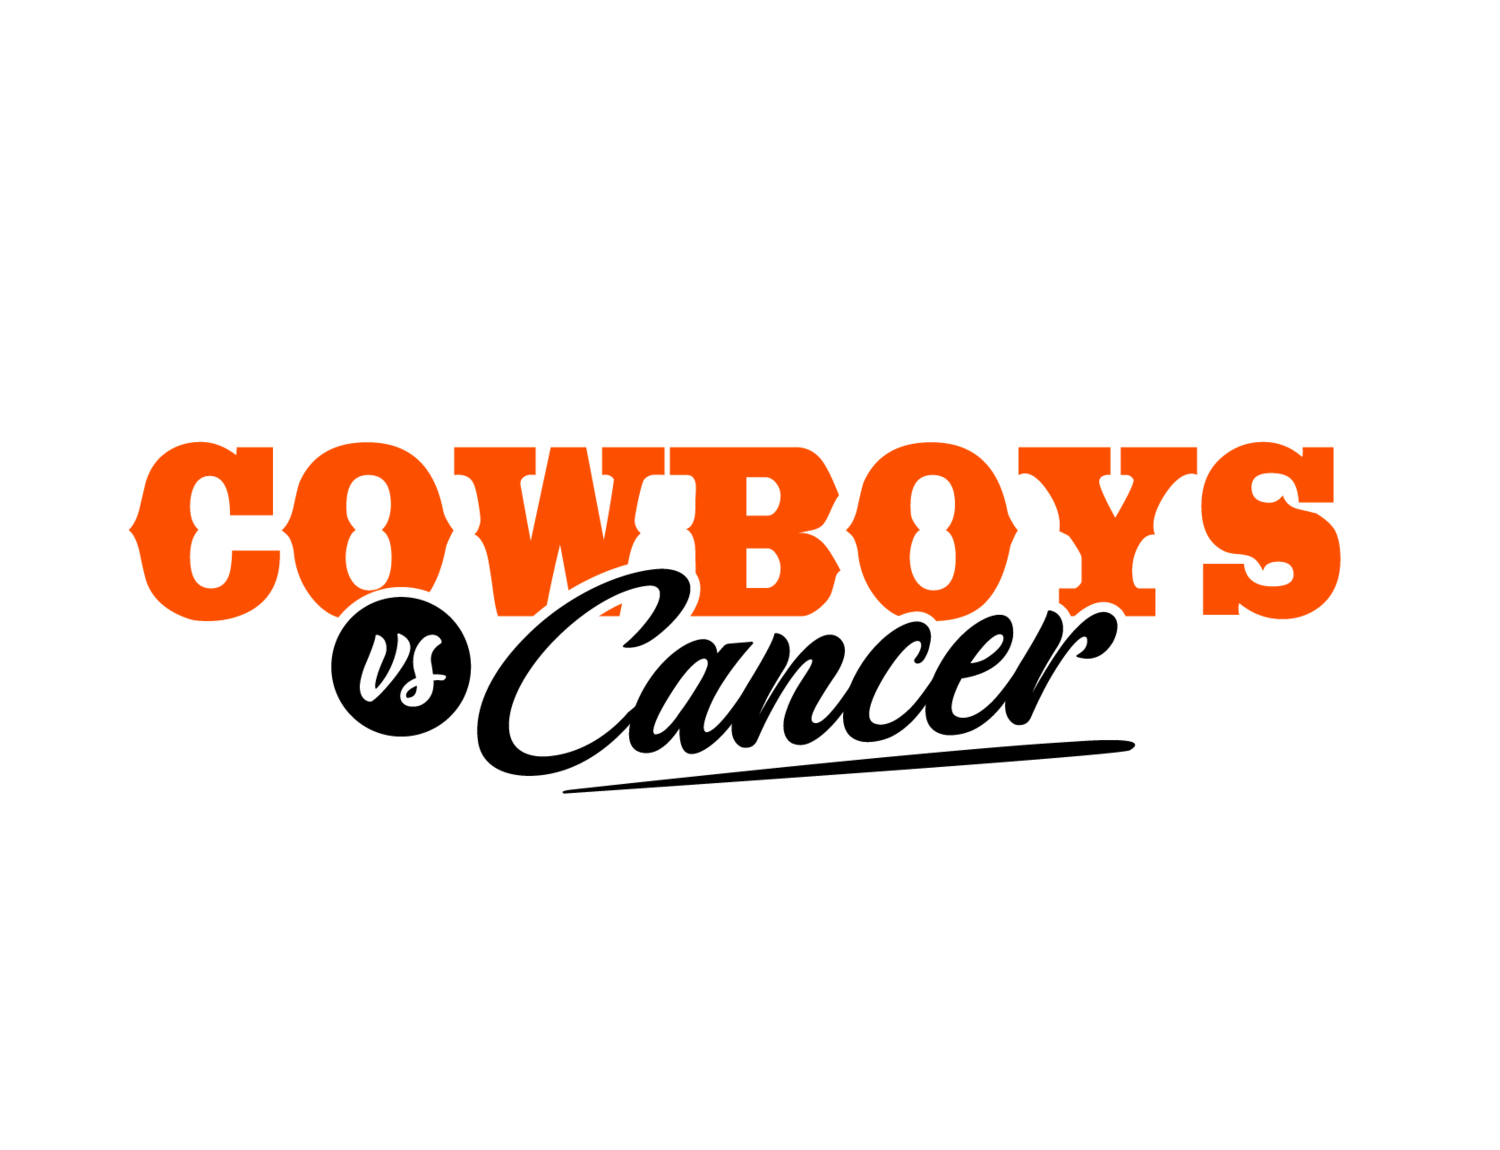 Cowboys vs. Cancer Cowboy Classic